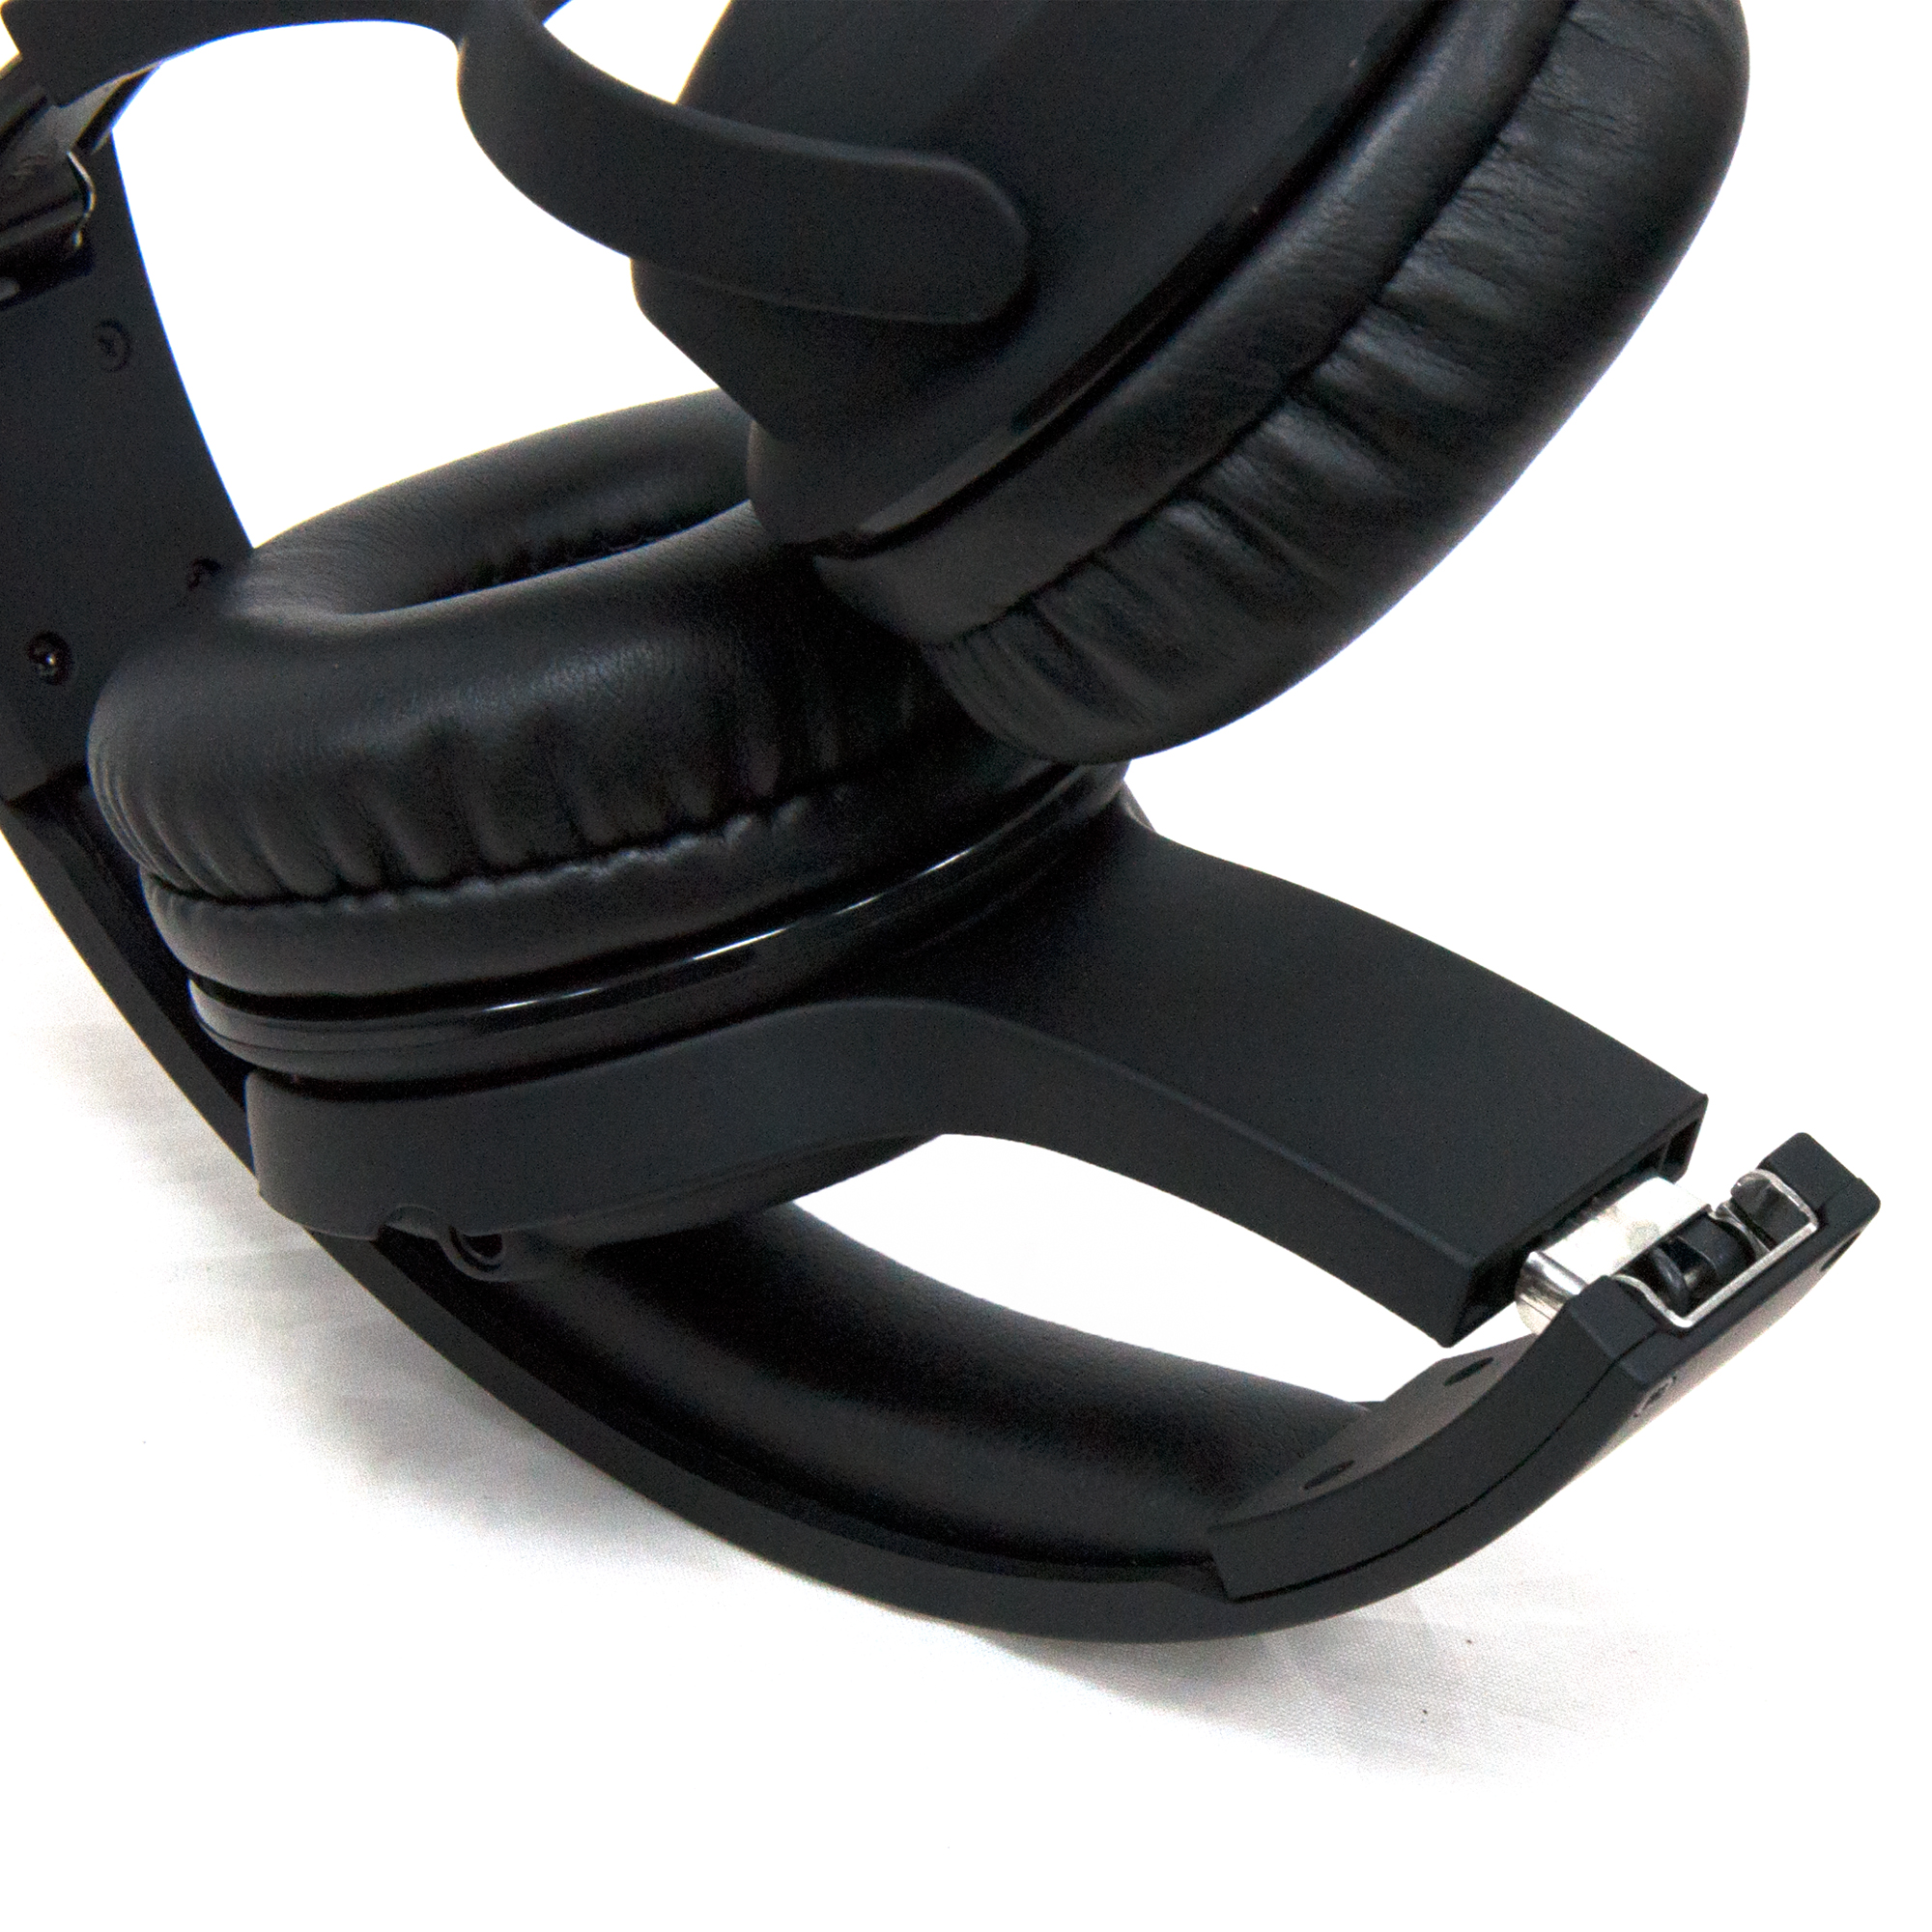 2 IN 1 handsfree bluetooth Speaker, Promotional gift CSR 4.0 wireless headphones made-in-china BT-109